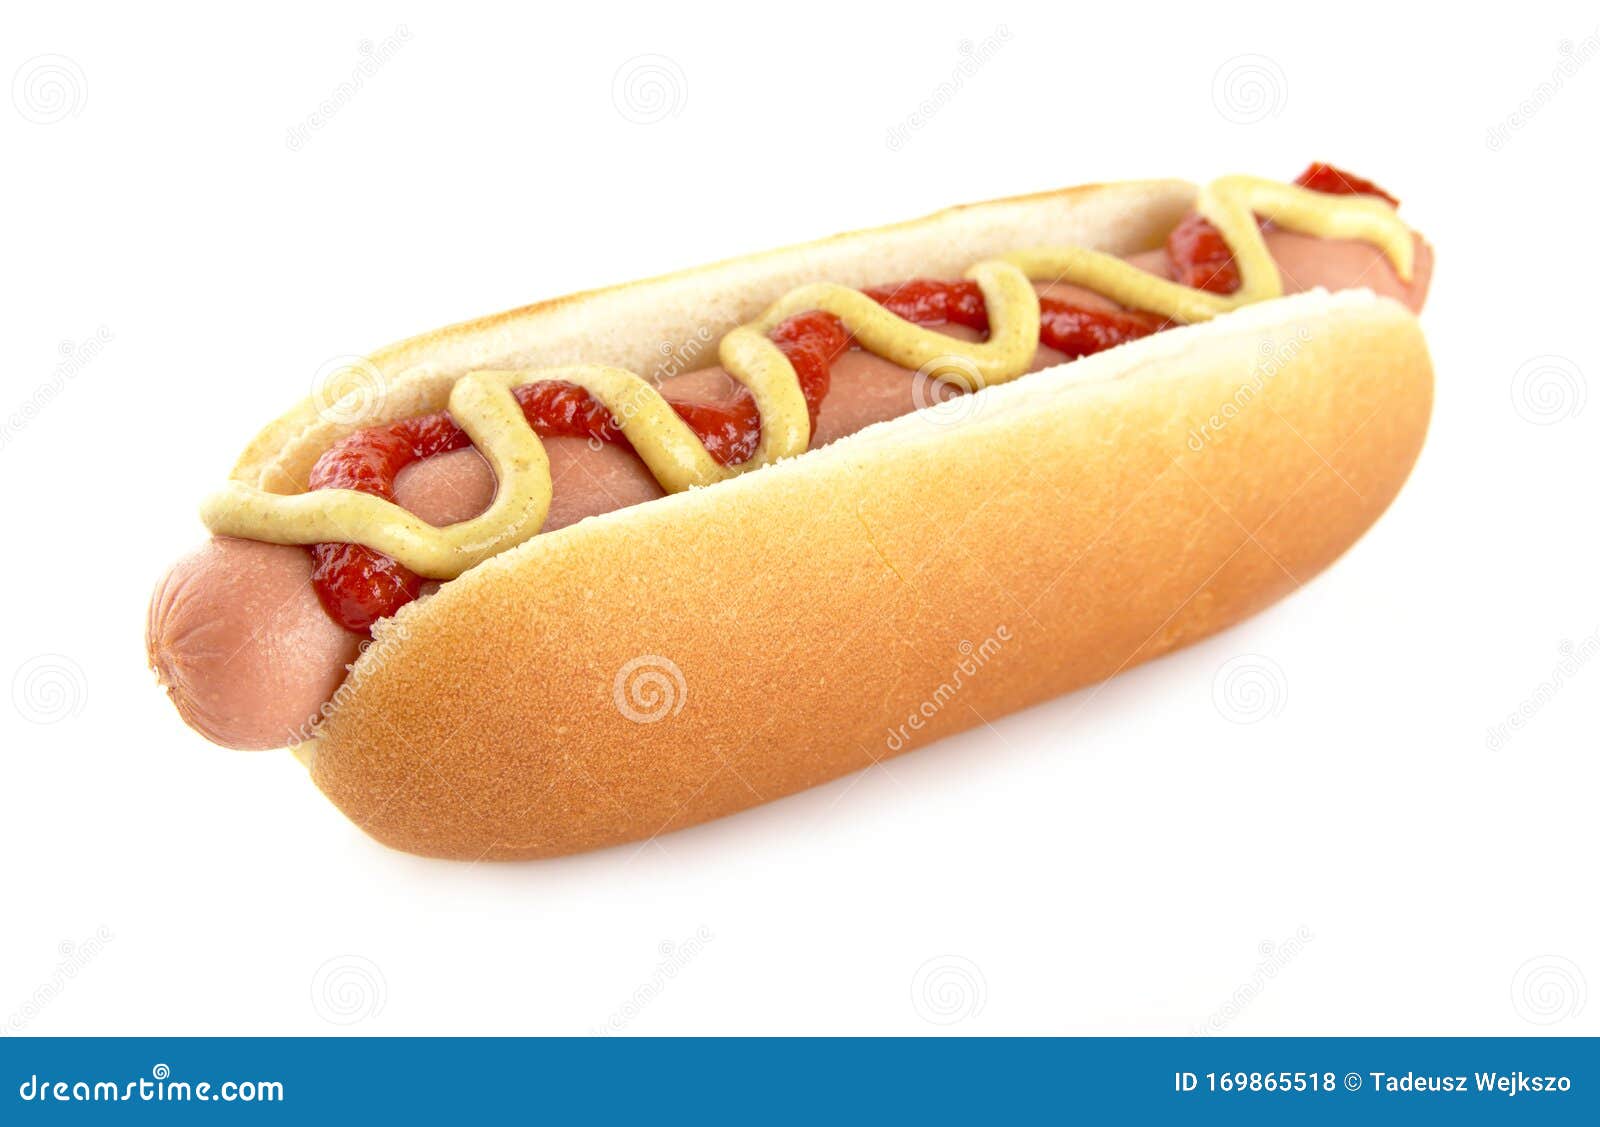 american hotdog with mustard  on white